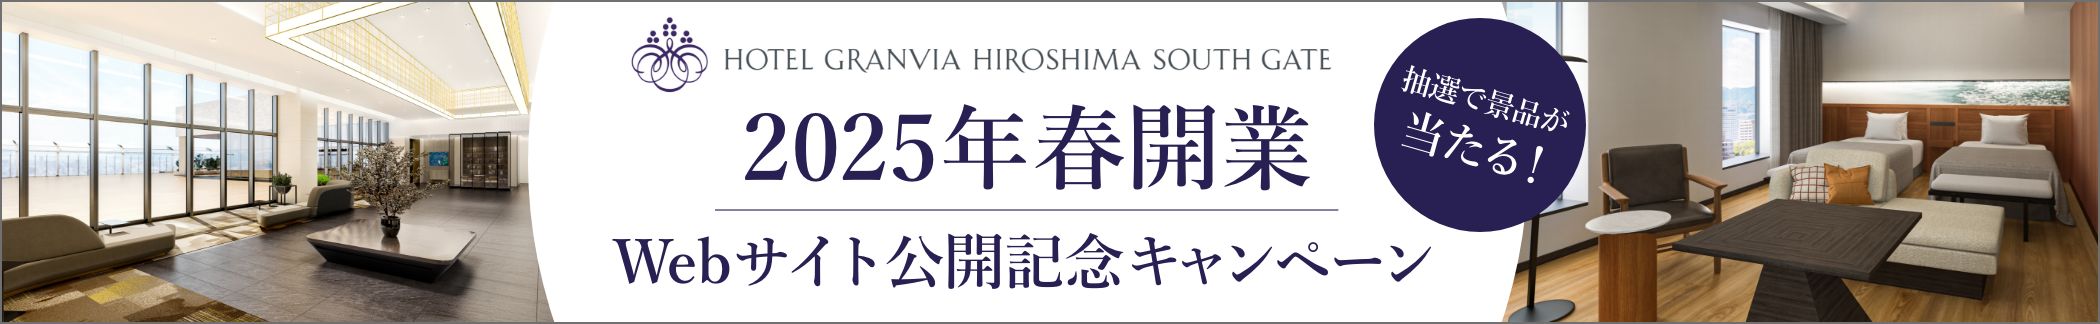 HOTEL GRANVIA HIROSHIMA SOUTH GATE 2025年春開業 Webサイト公開記念キャンペーン